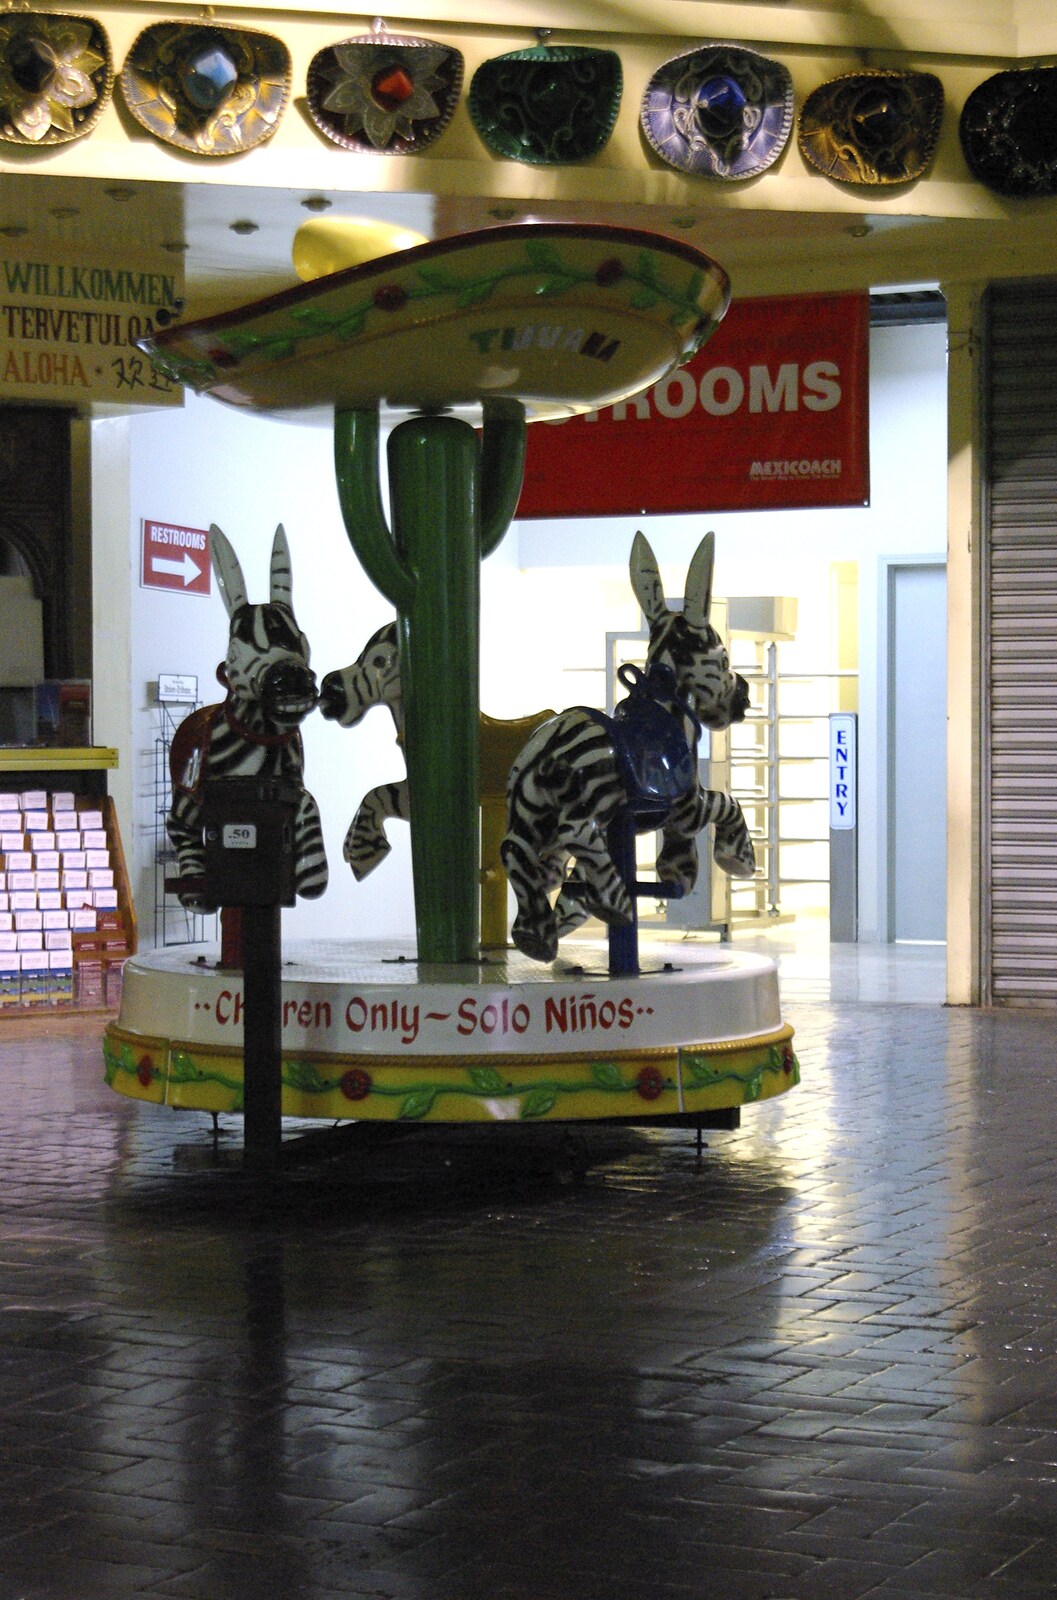 Rosarito and Tijuana, Baja California, Mexico - 2nd March 2008: In Tijuana bus station - a small carousel with zebra